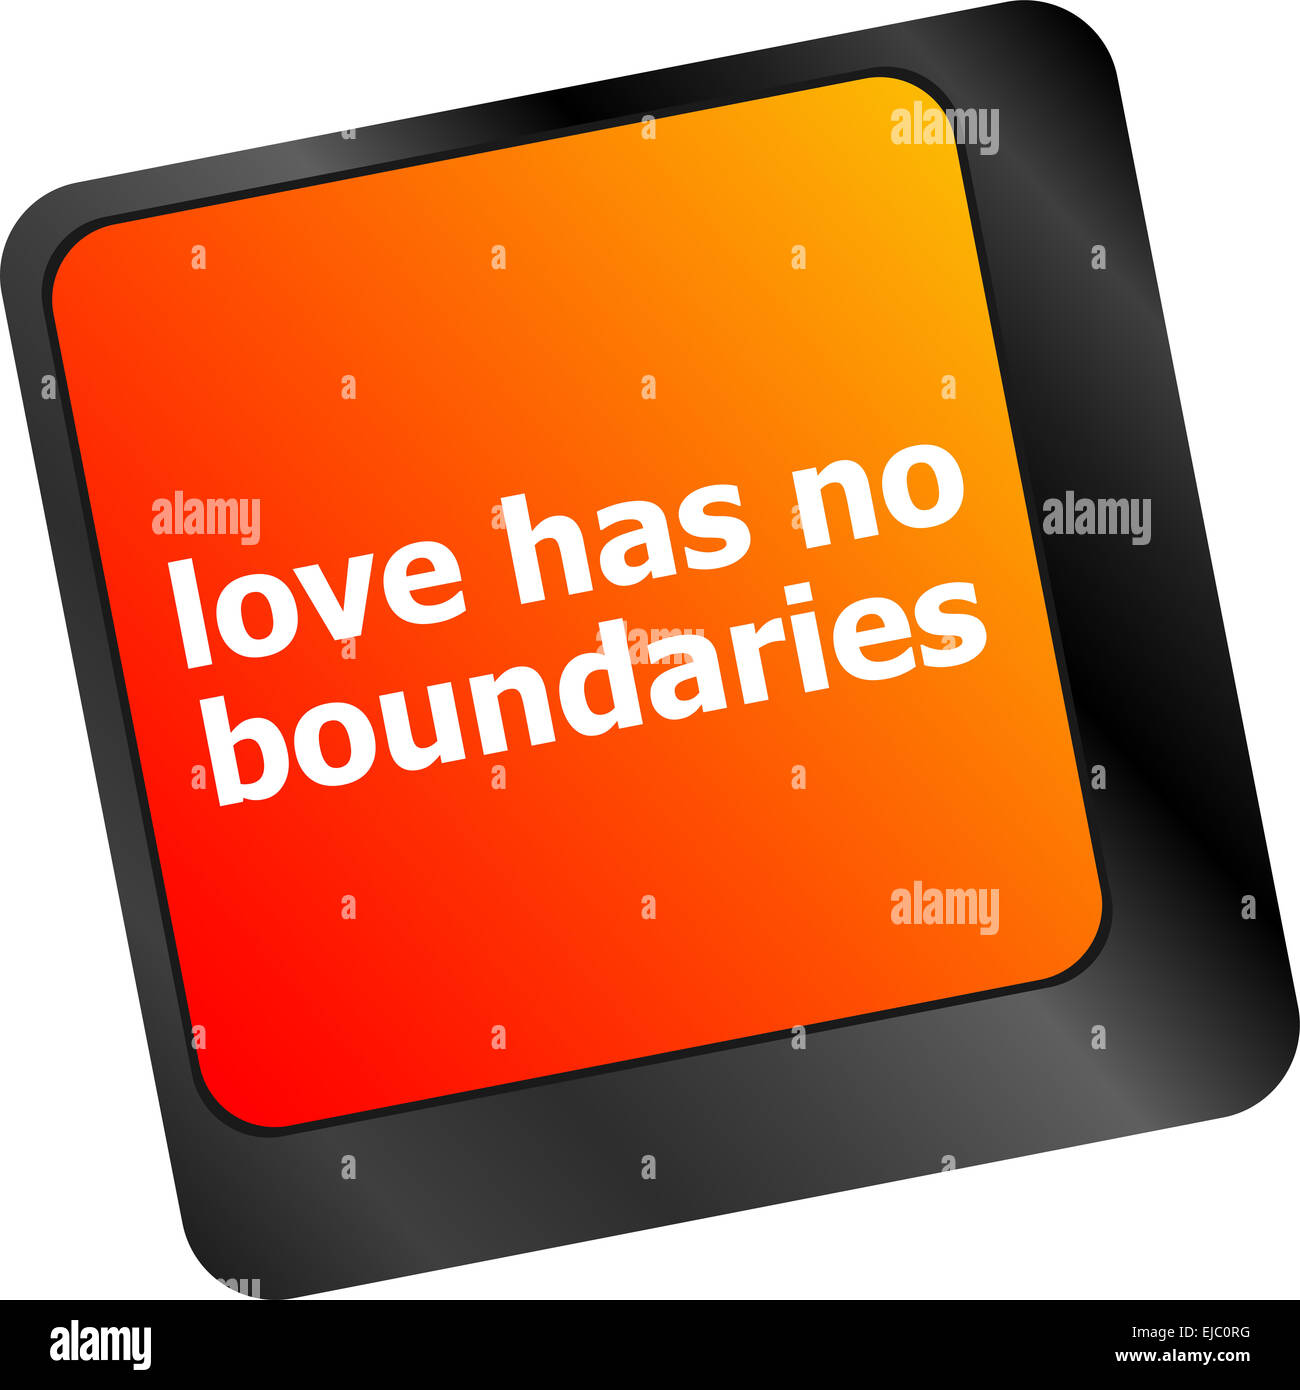 https://c8.alamy.com/comp/EJC0RG/wording-love-has-no-boundaries-on-computer-keyboard-key-EJC0RG.jpg